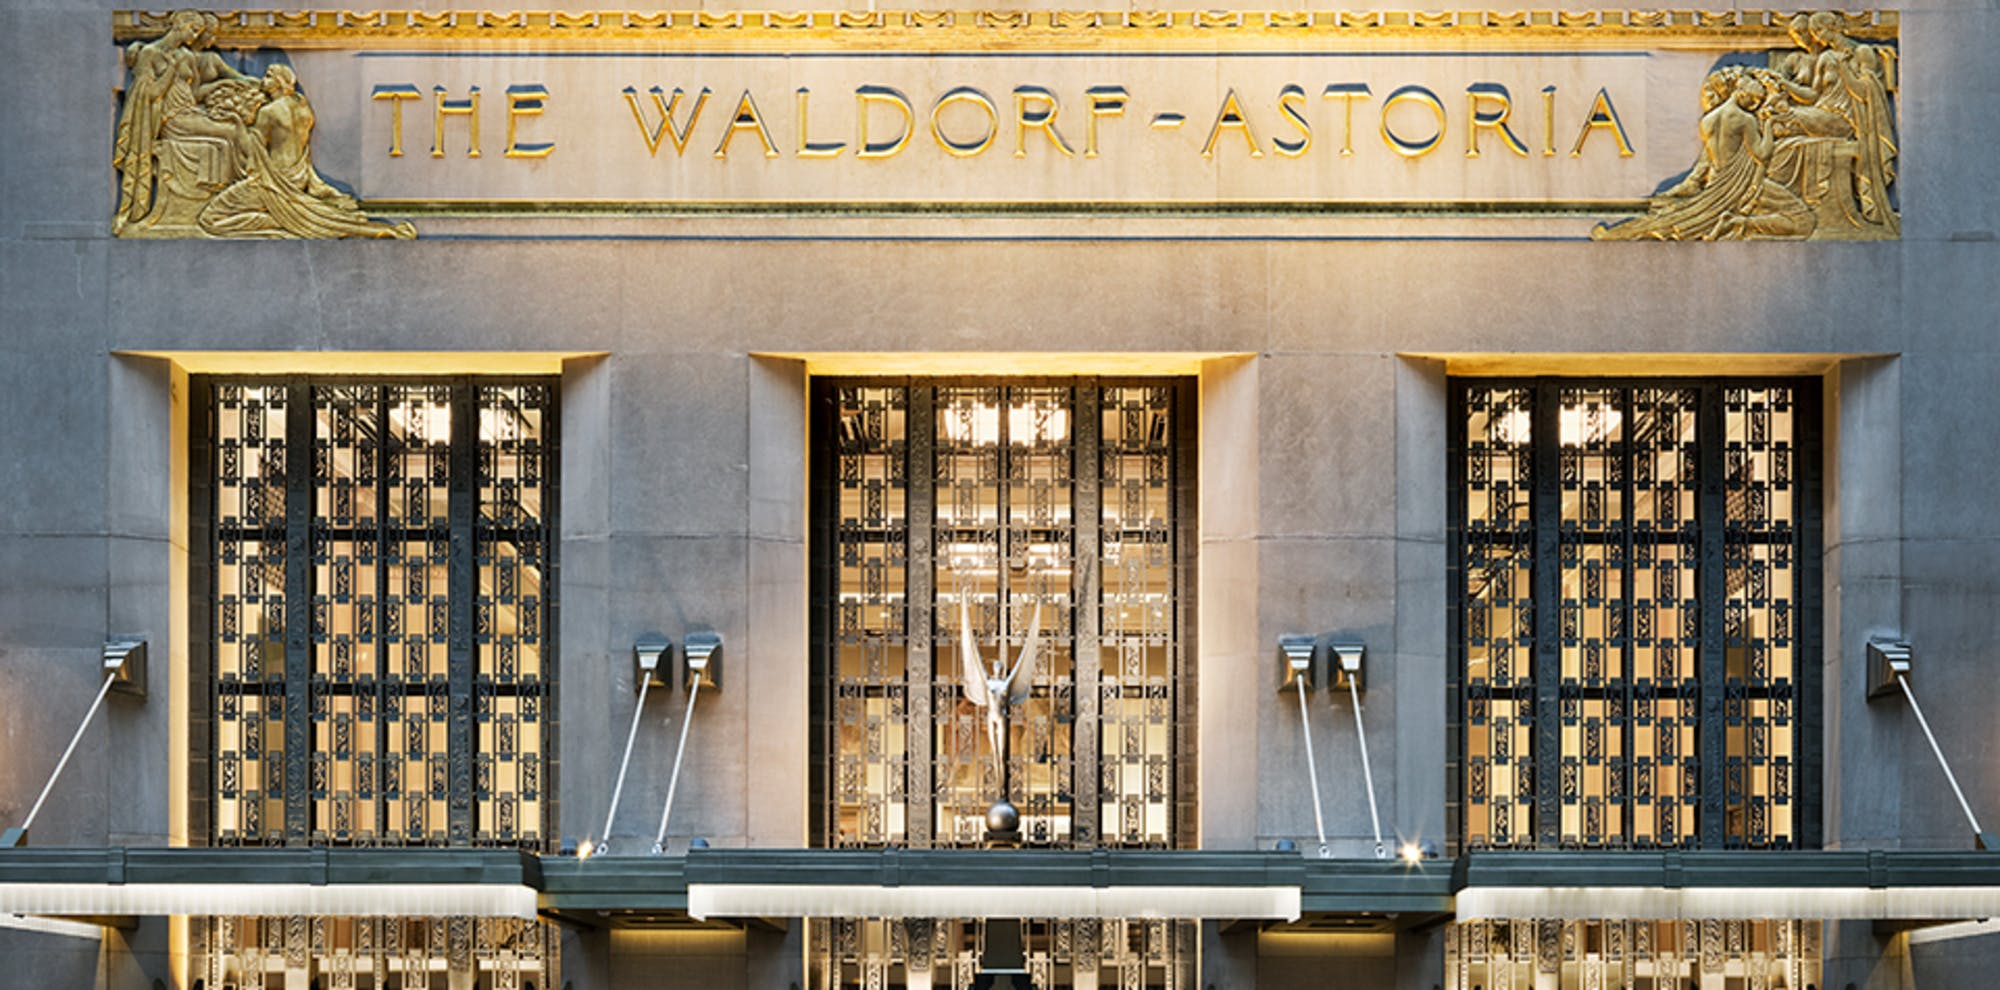 Waldorf Astoria turned into housing